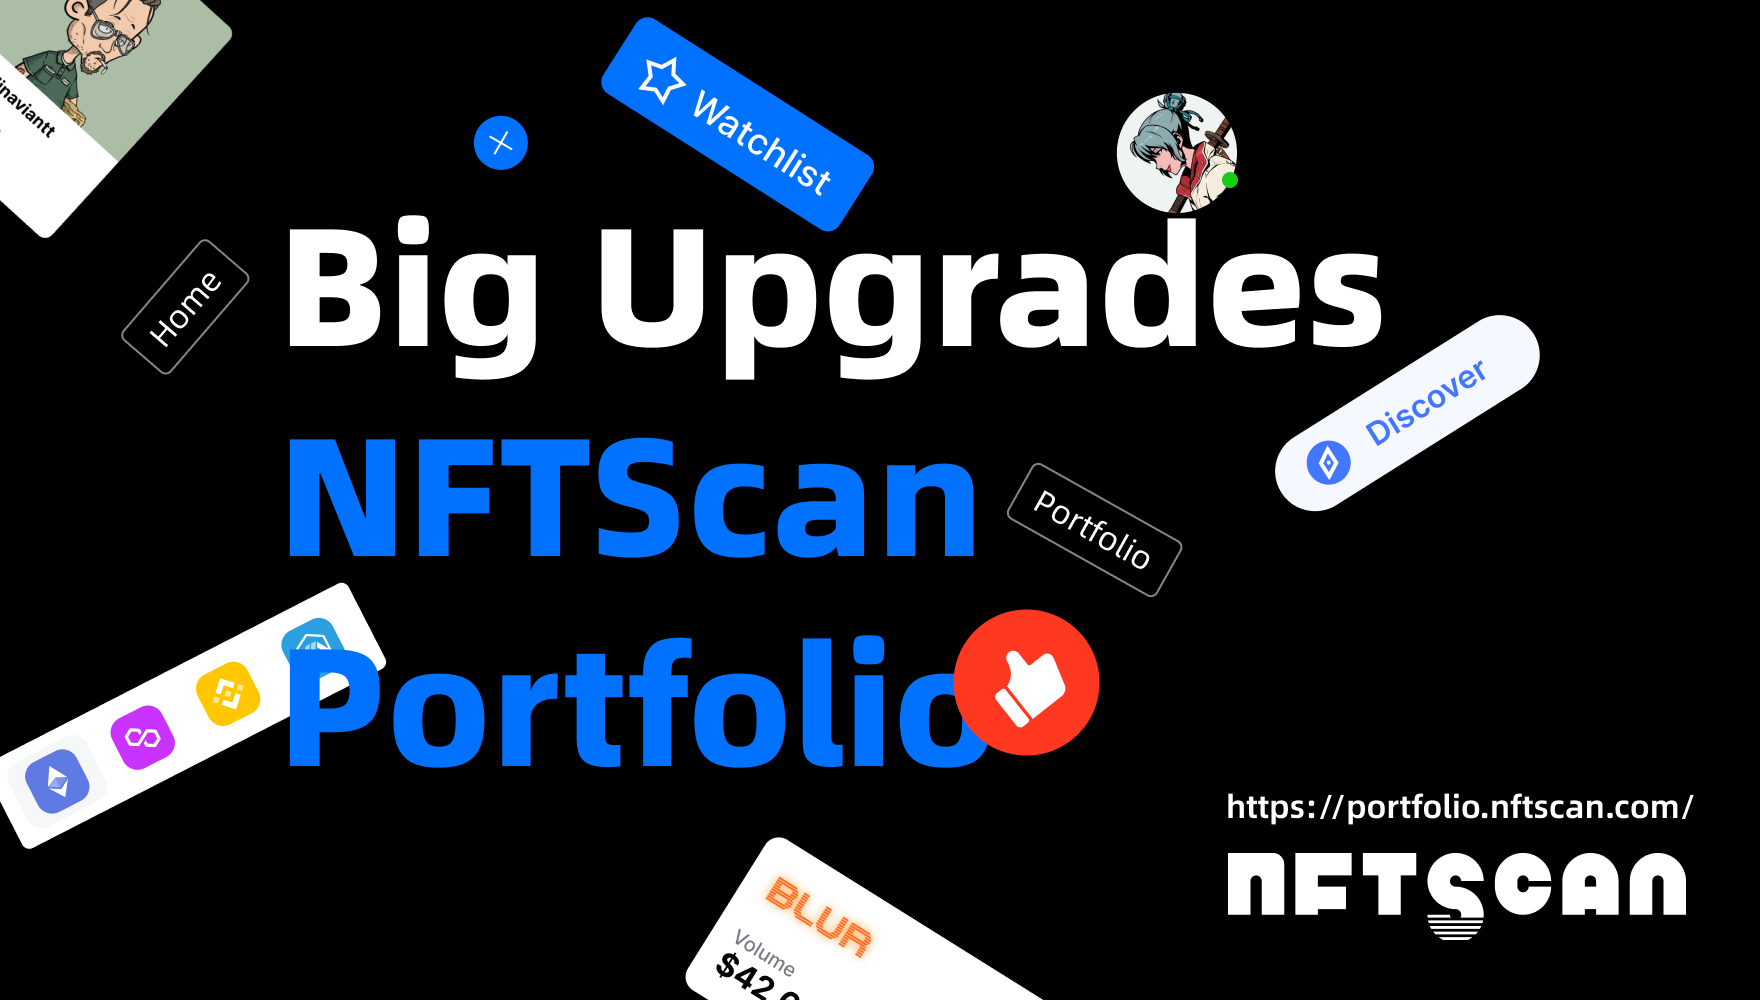 NFTScan 团队发布升级版 NFT Portfolio 产品